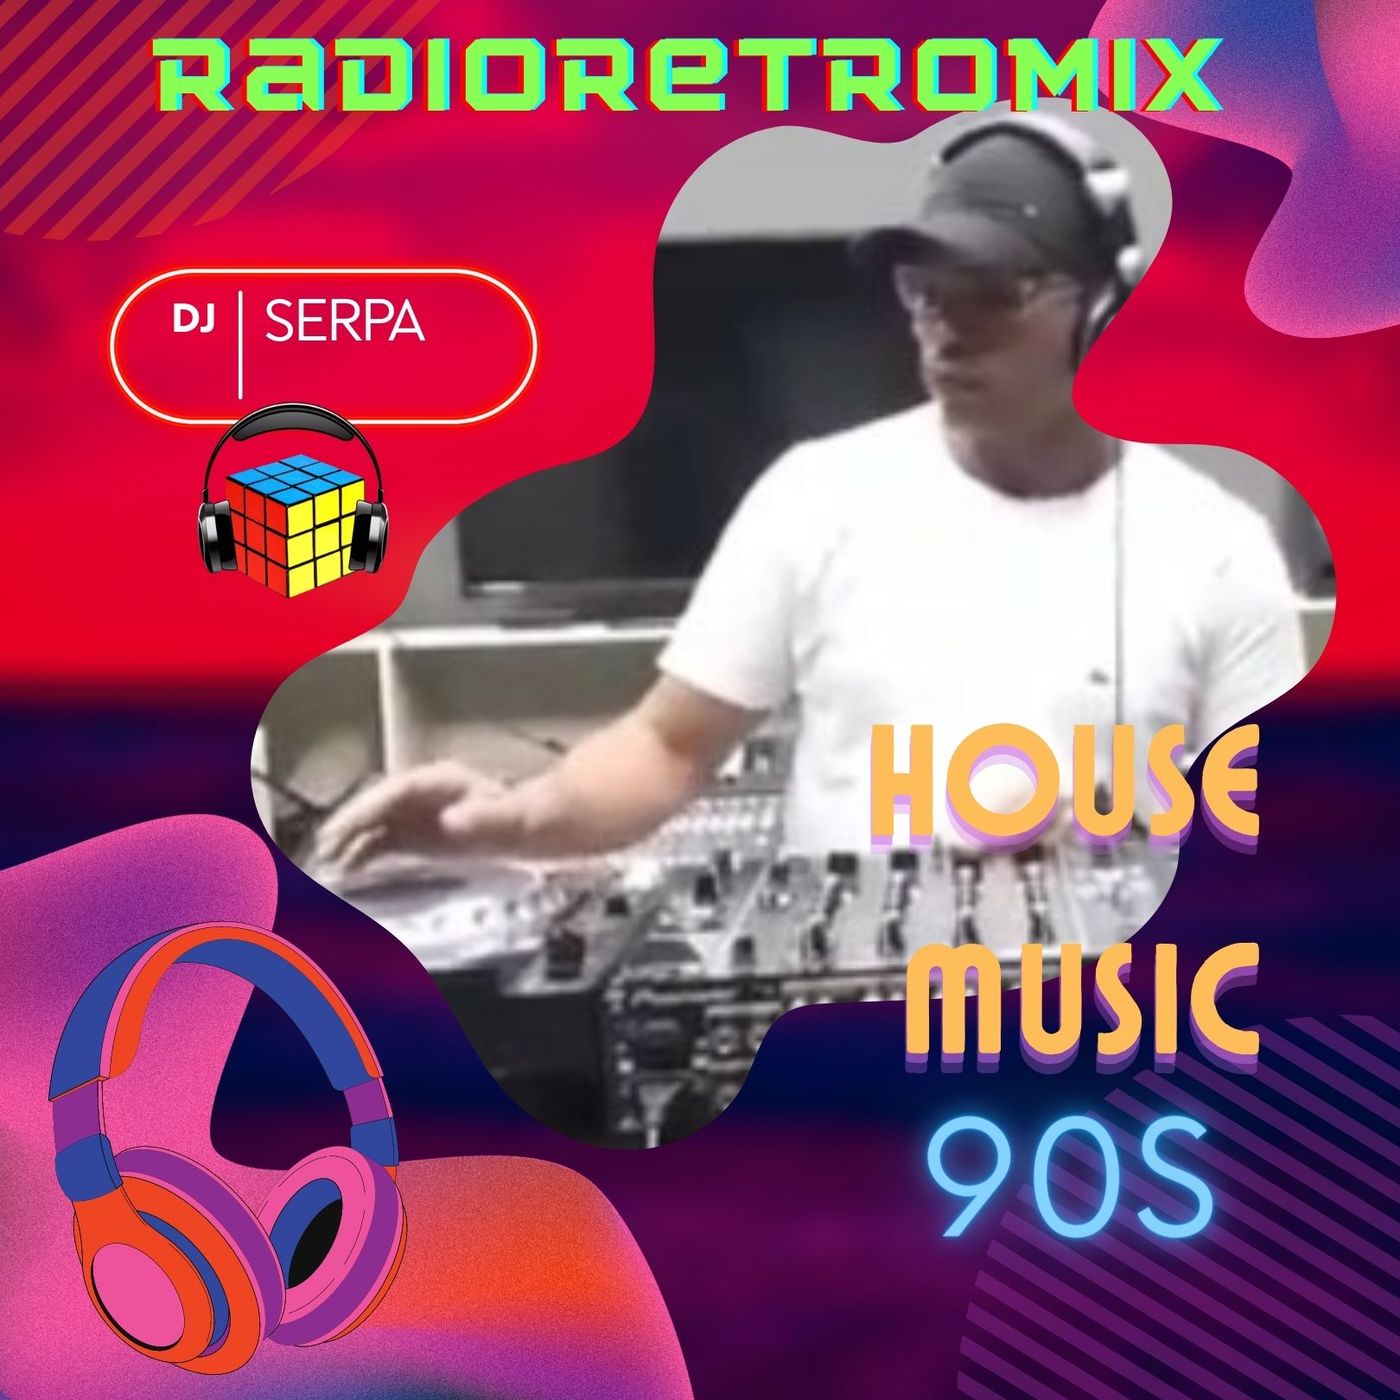 90s House Music Remixes by DJ Serpa